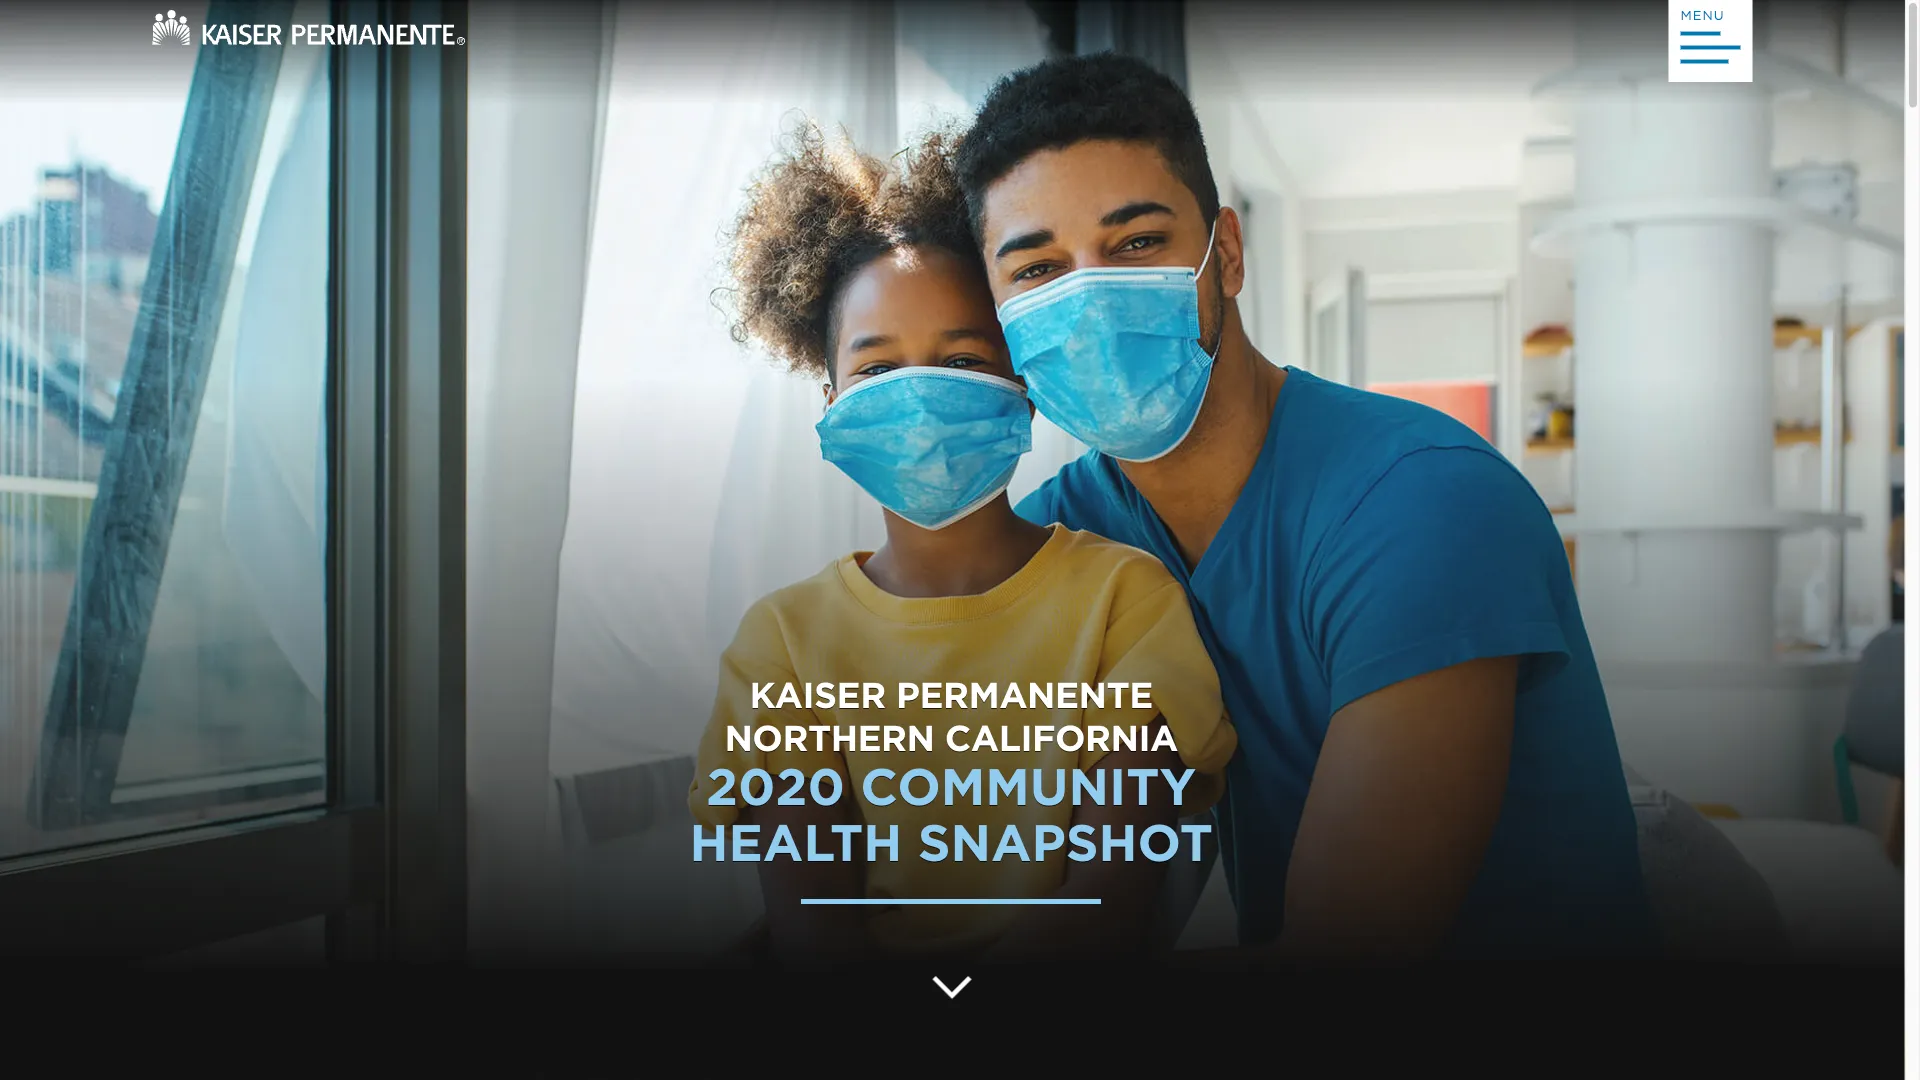 Entry screen of 2020 Community Health Snapshot